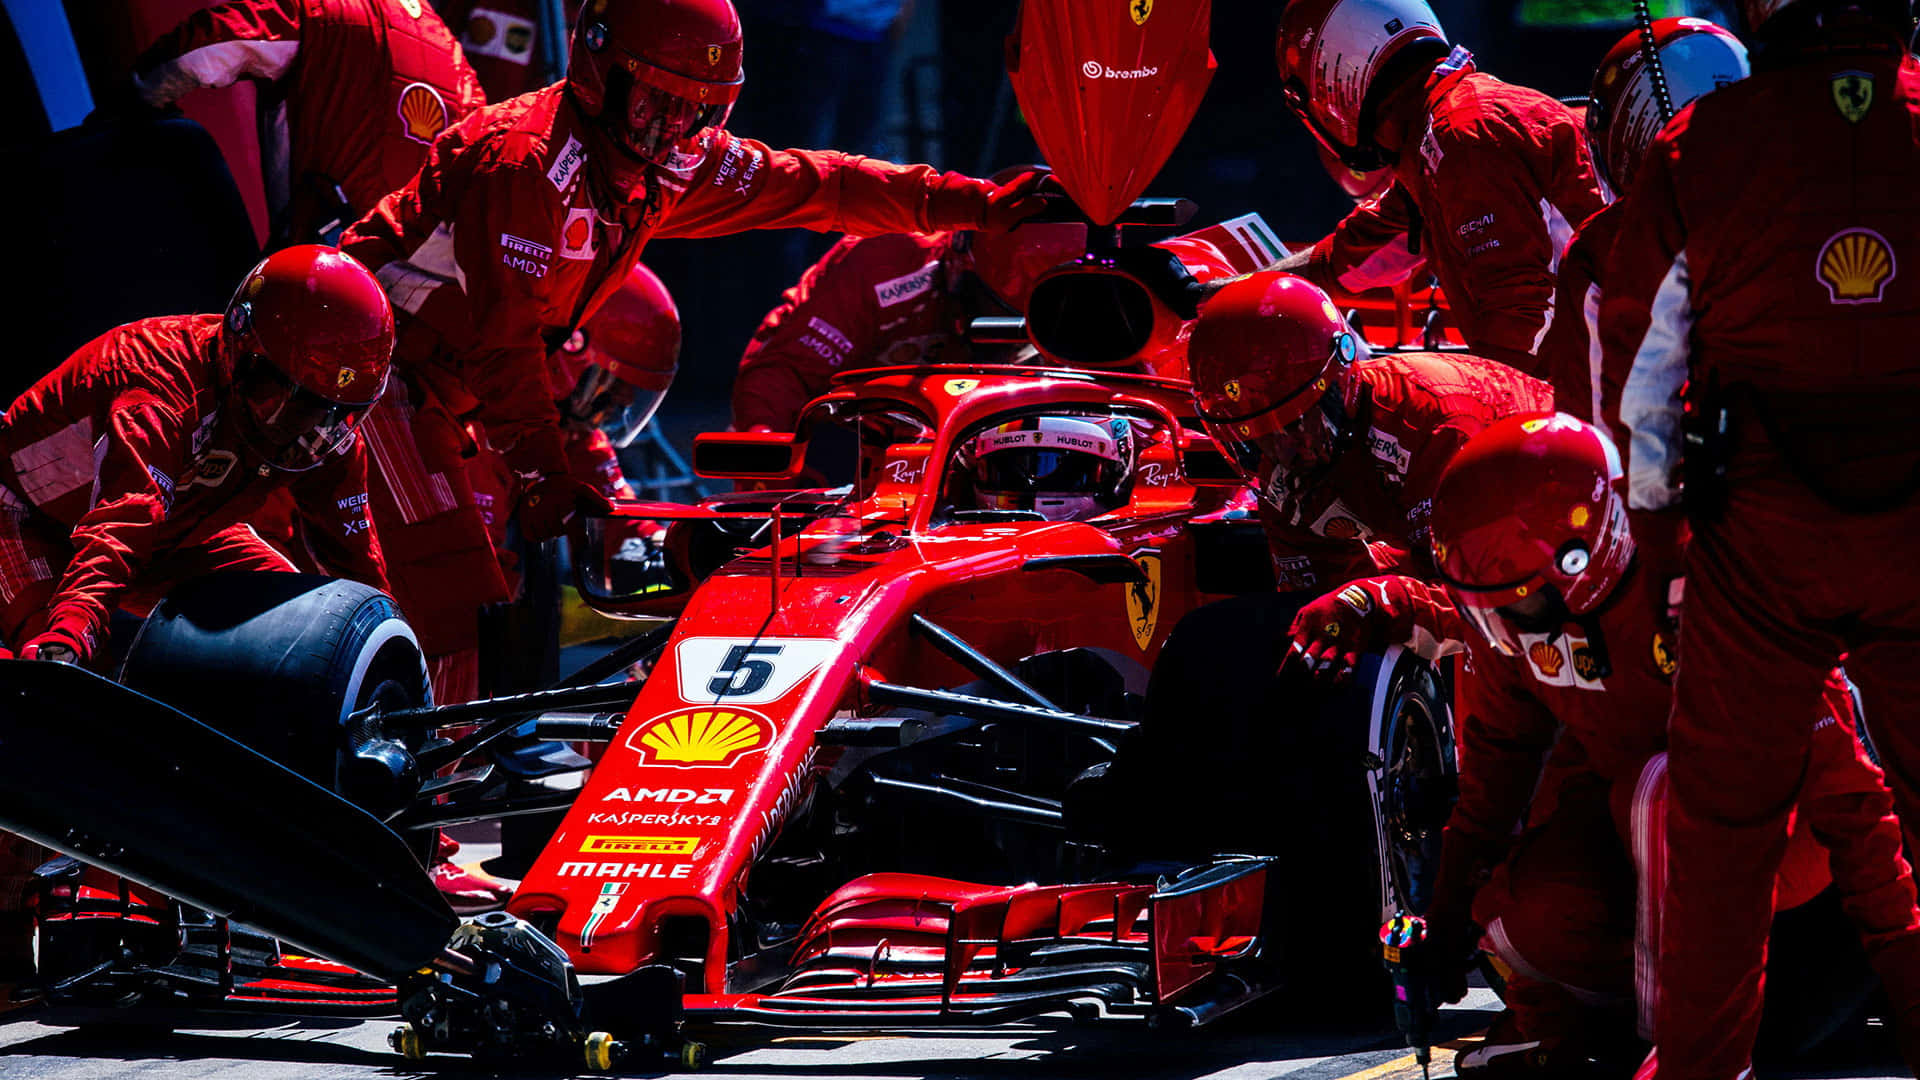 Ferrarif1 Team In Der Boxengasse Wallpaper